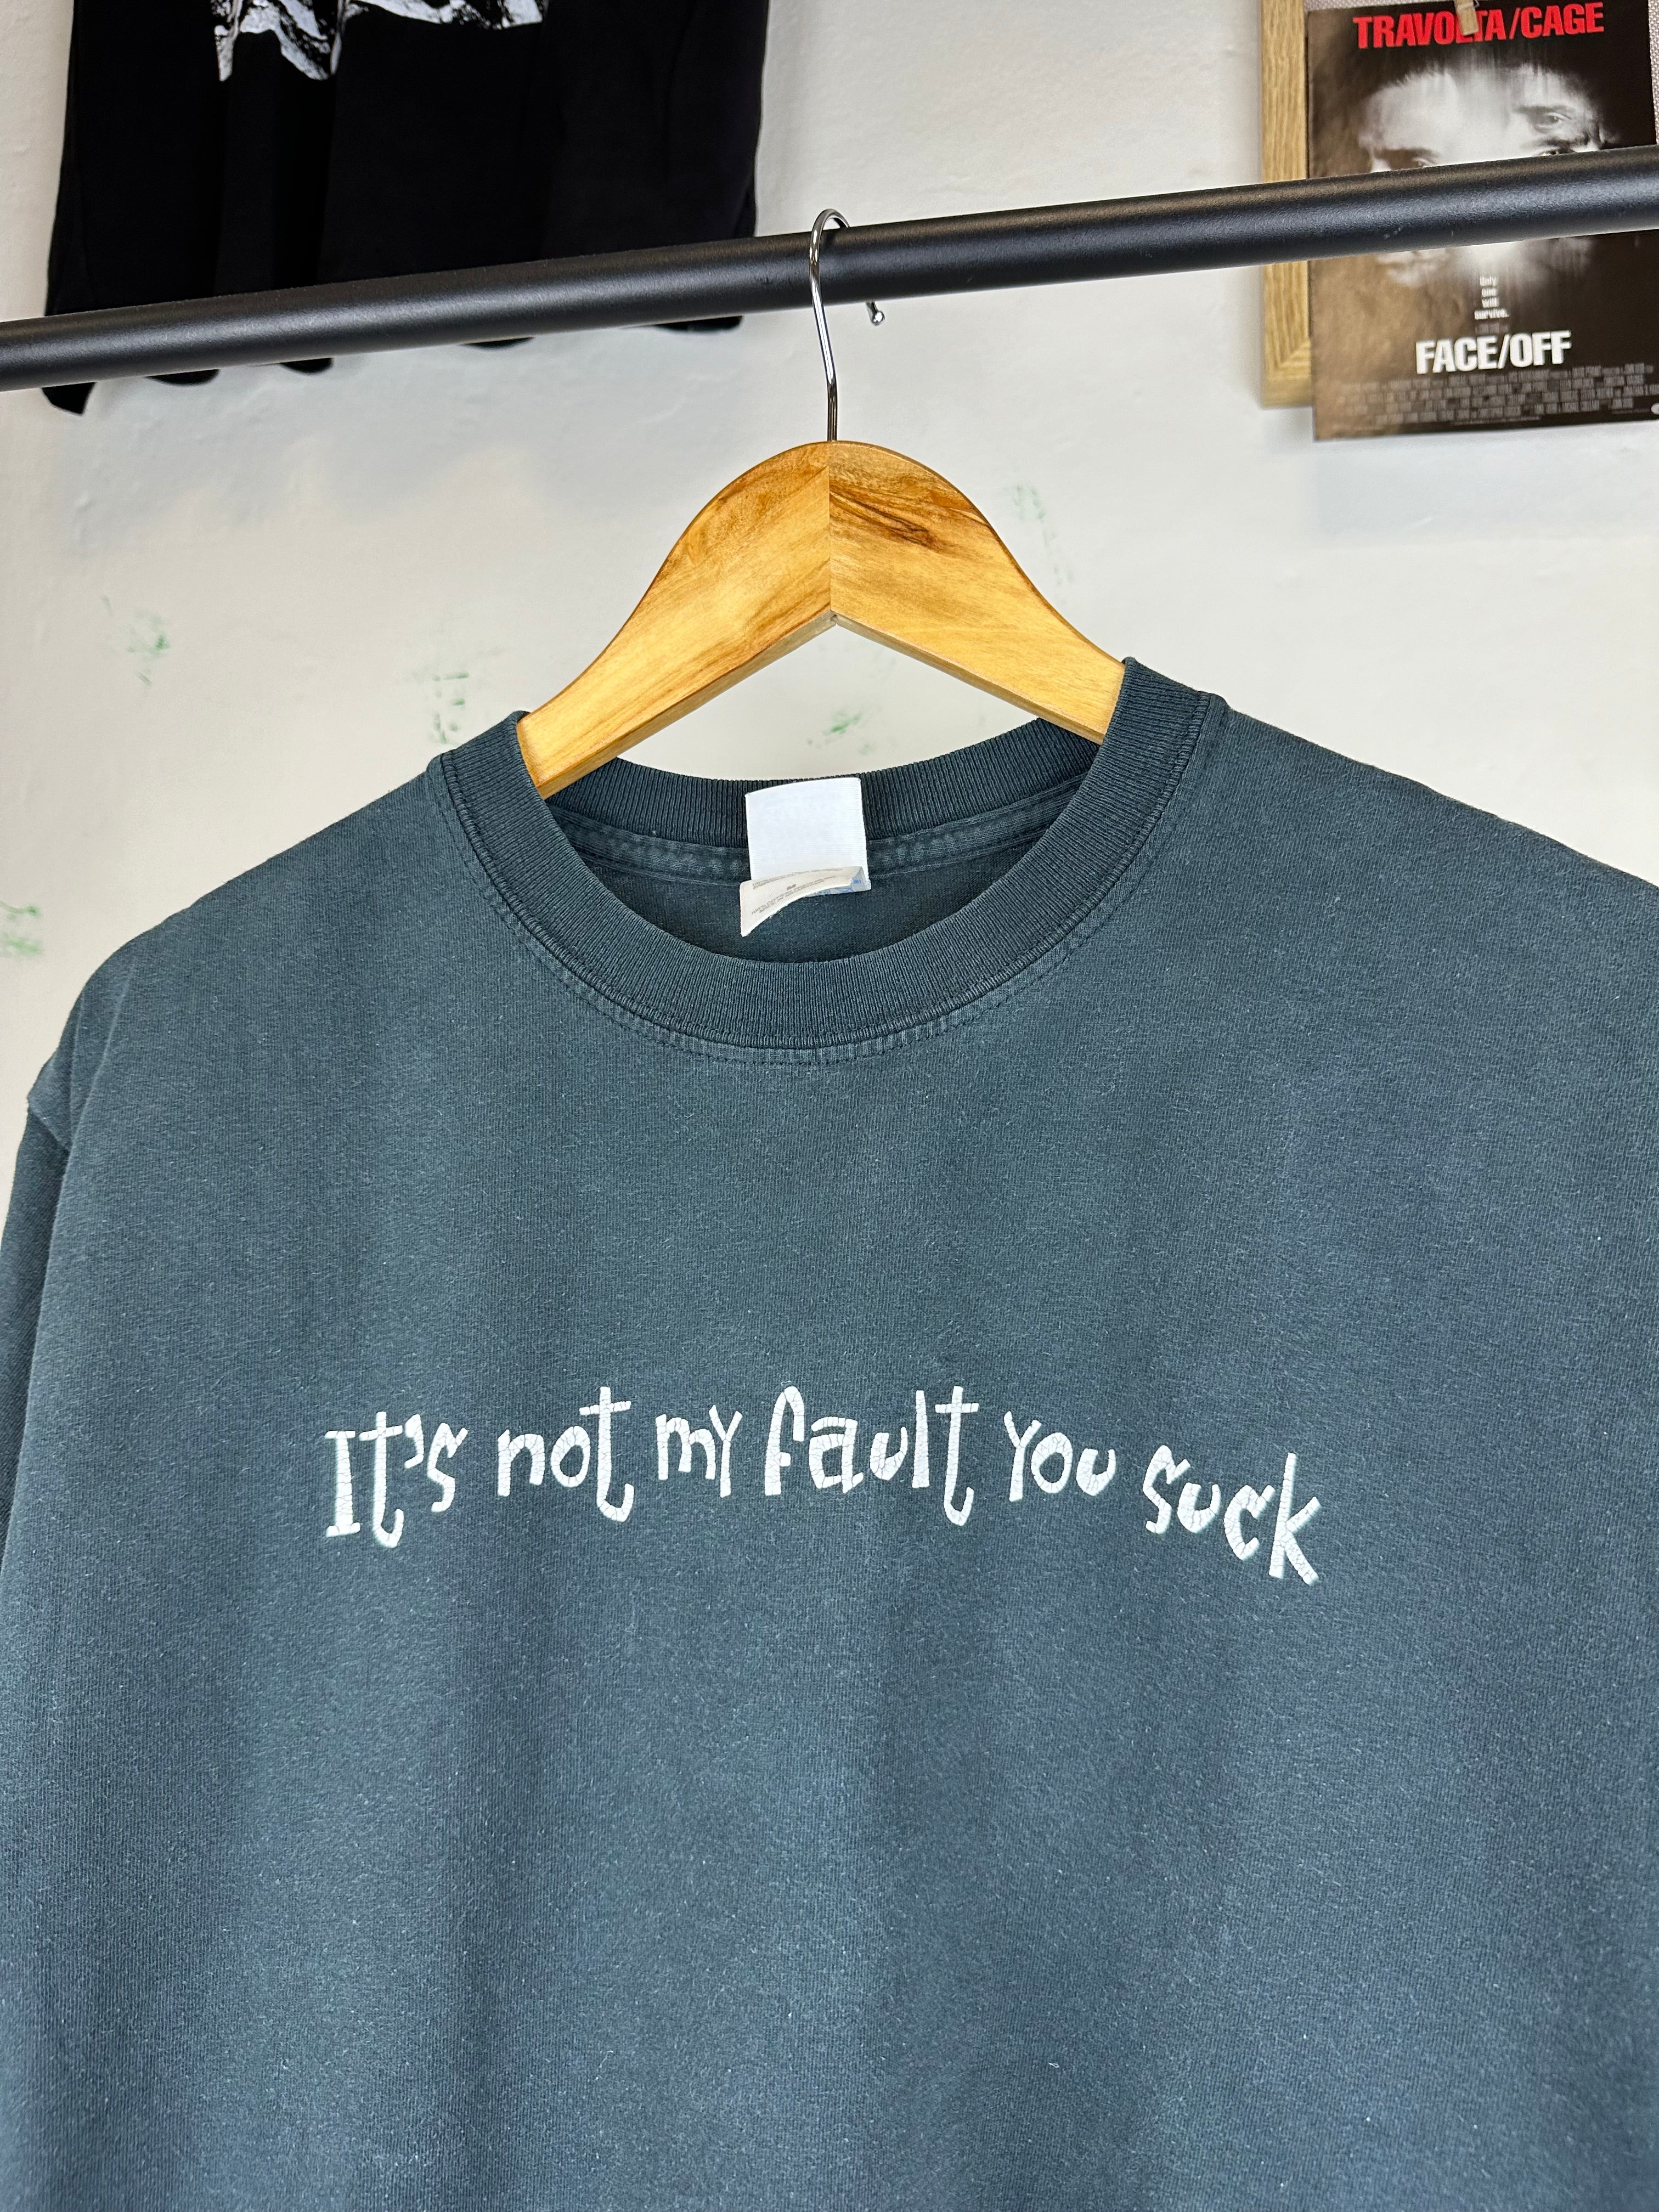 Vintage “It’s not my fault you suck” 90s t-shirt - size M